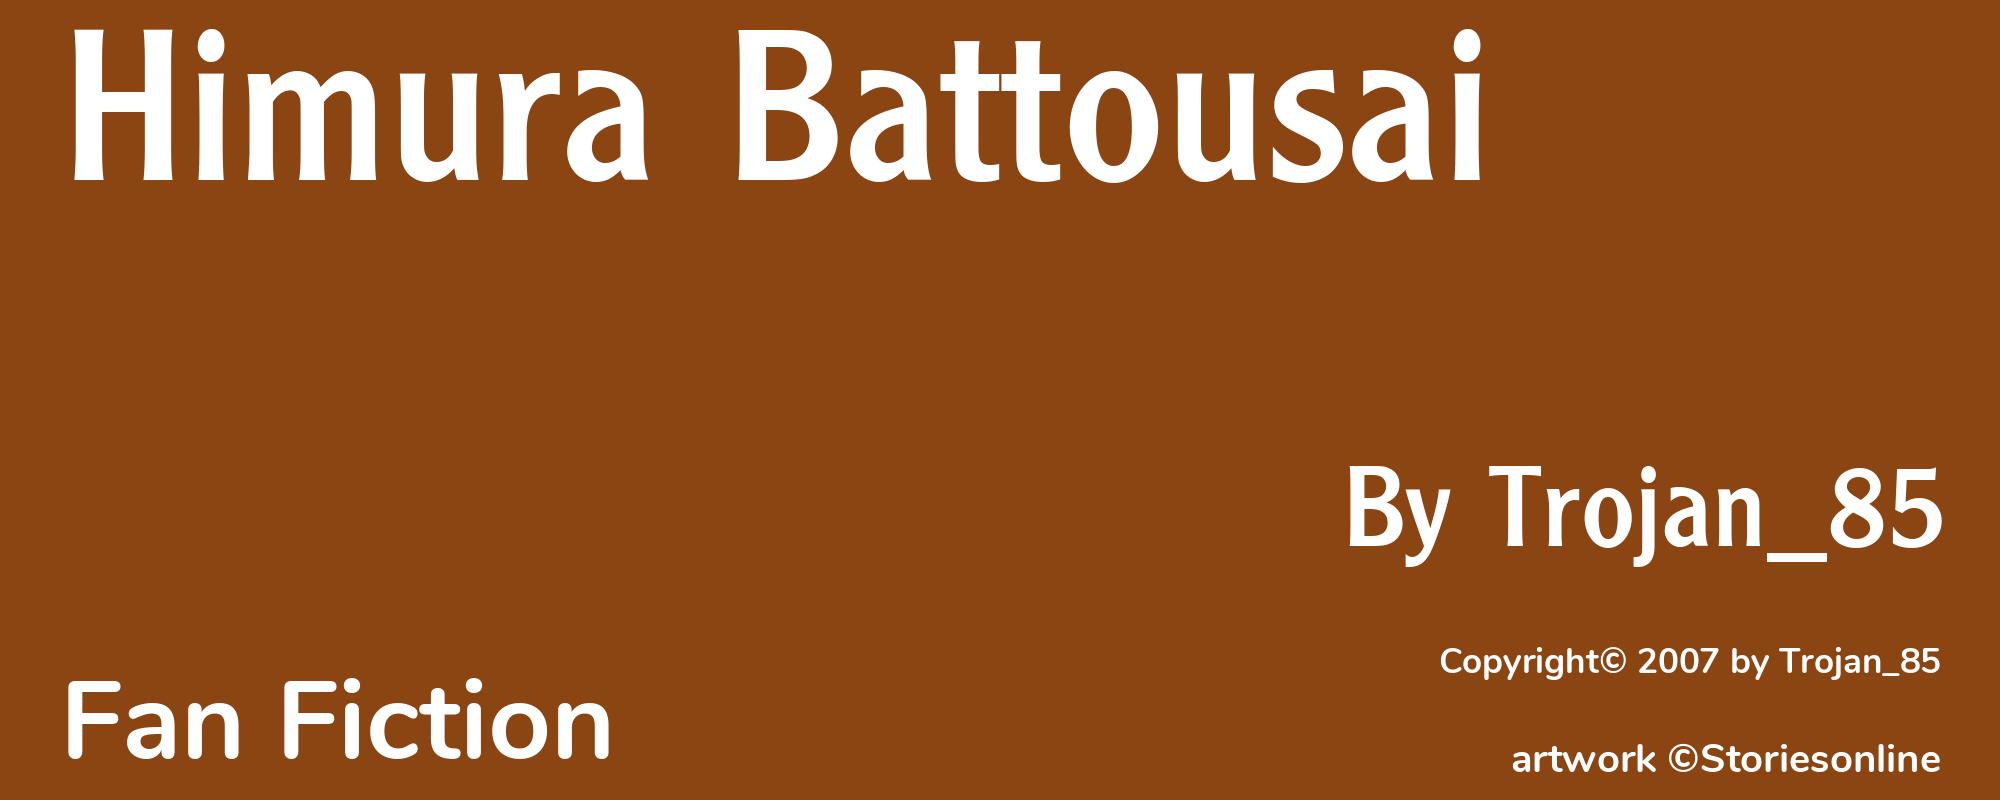 Himura Battousai - Cover